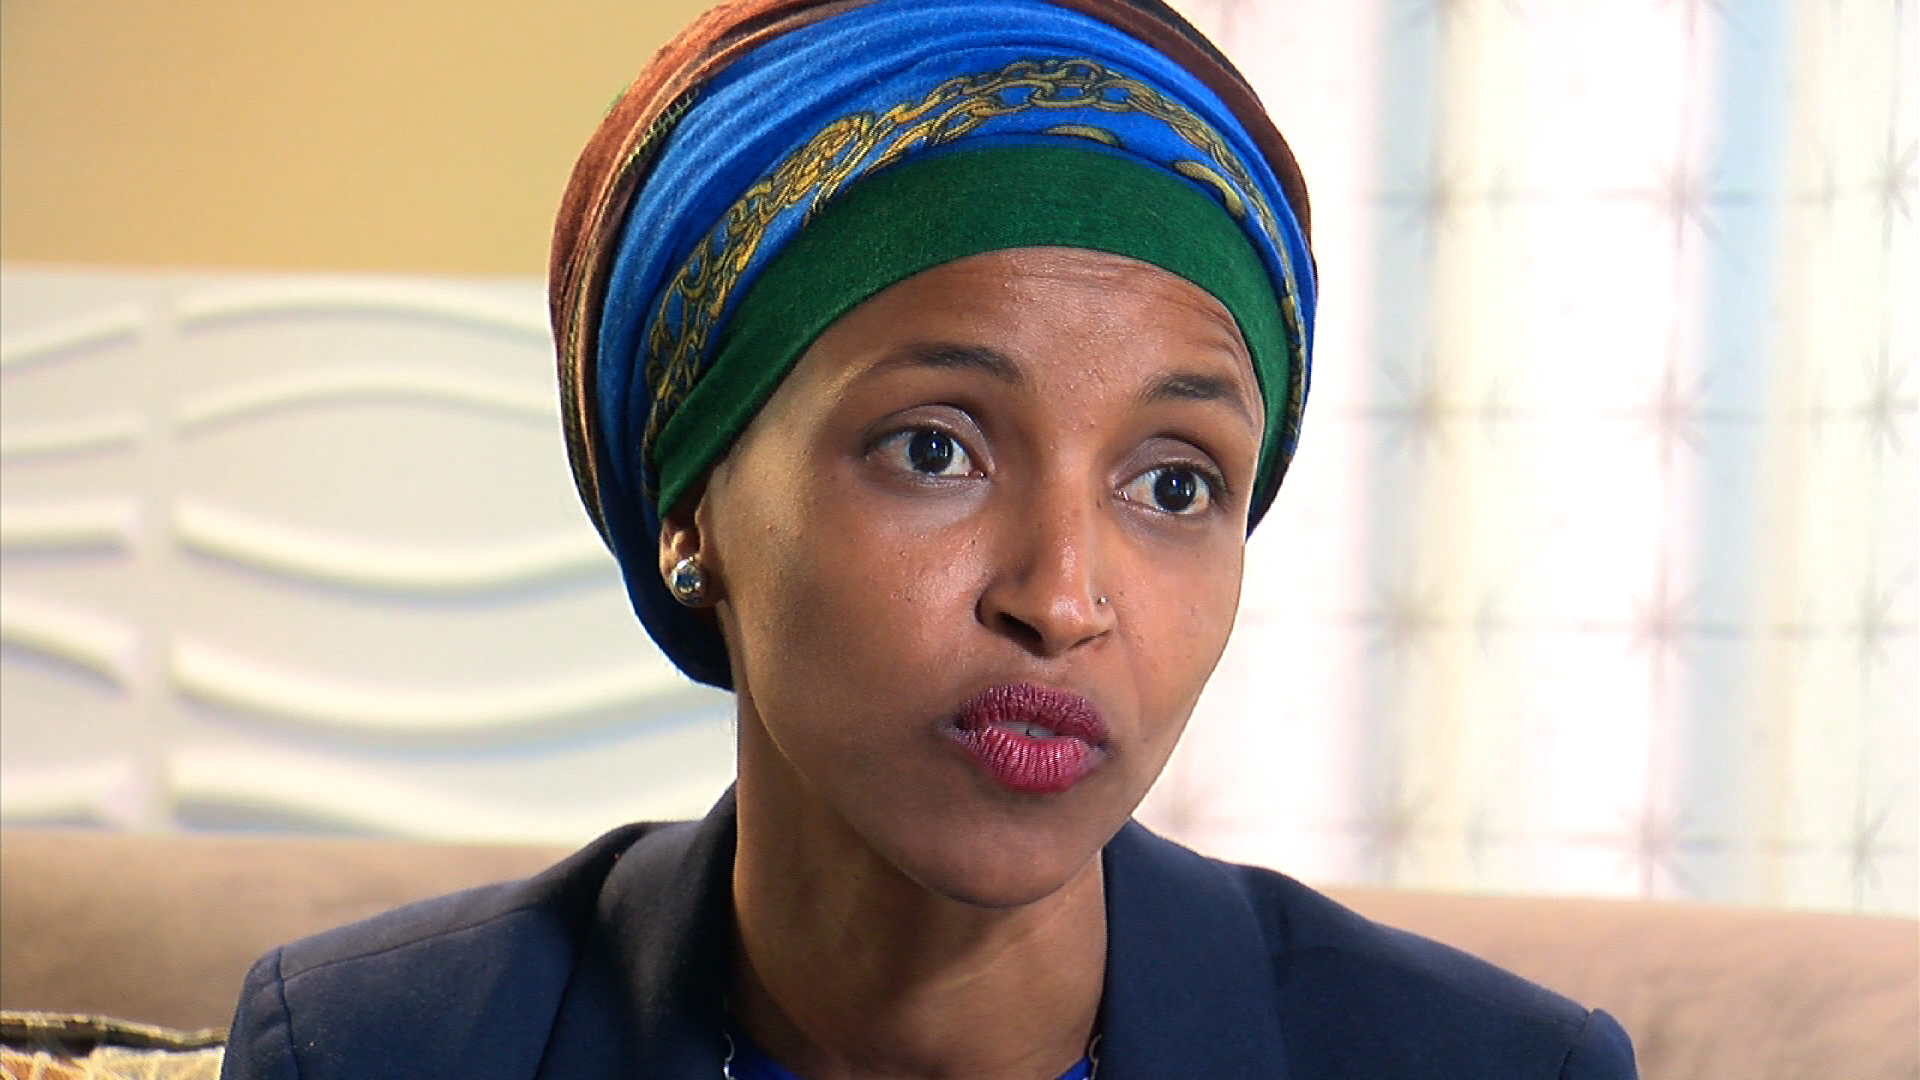 Ilhan Omar, a Somali American politician serving as the U.S